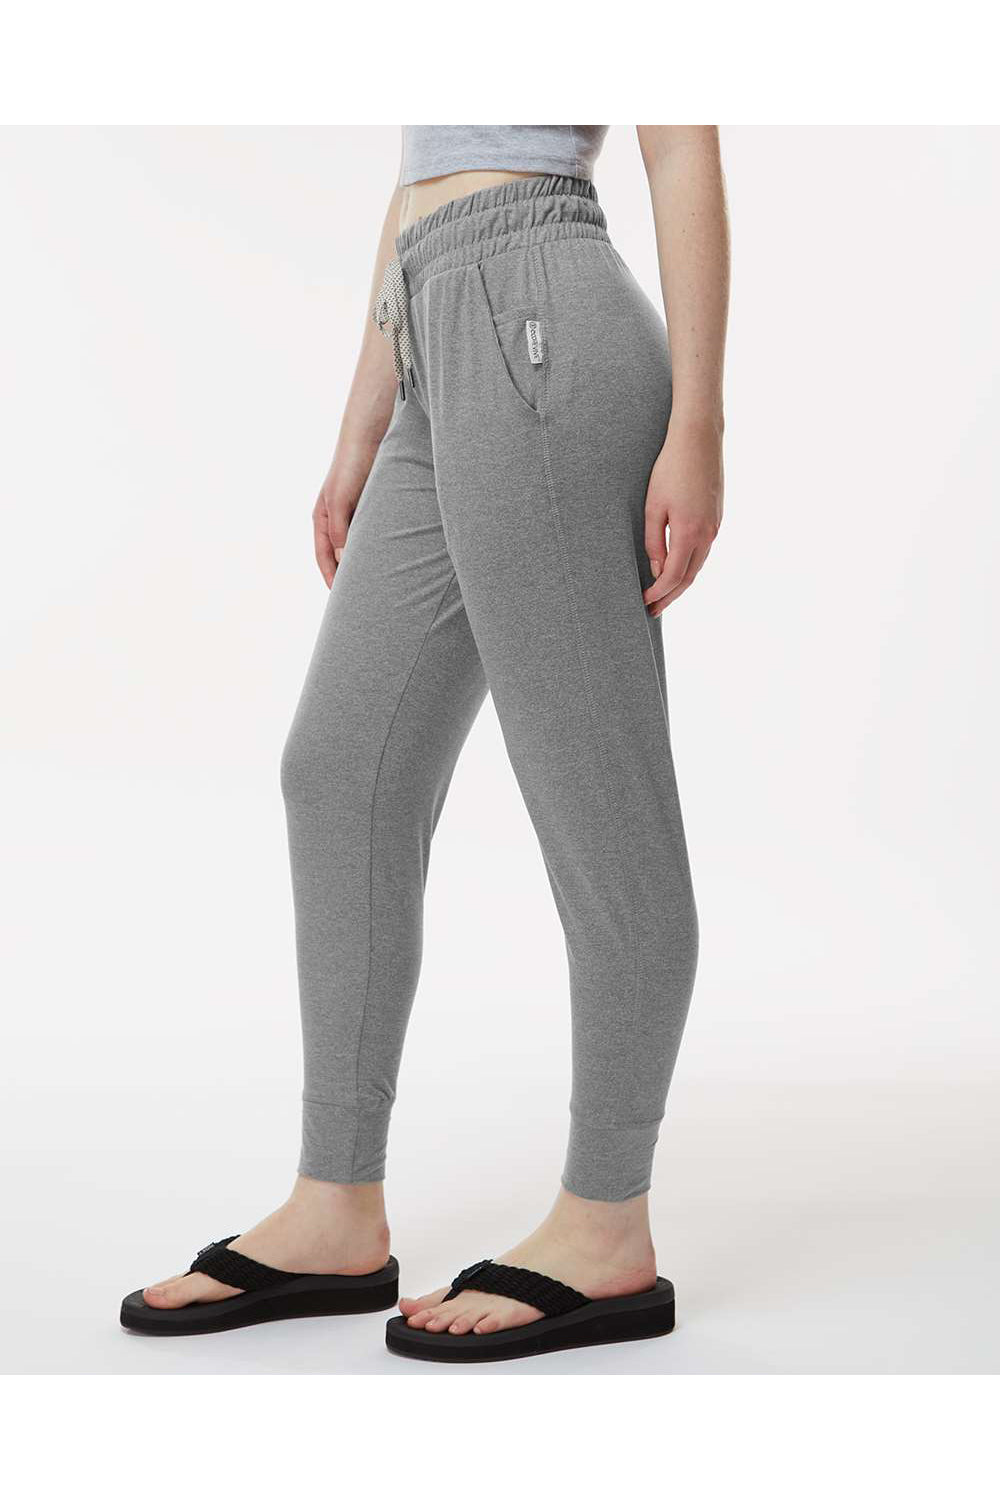 Holloway 222799 Womens Eco Revive Ventura Jogger Sweatpants w/ Pockets Heather Grey Model Side